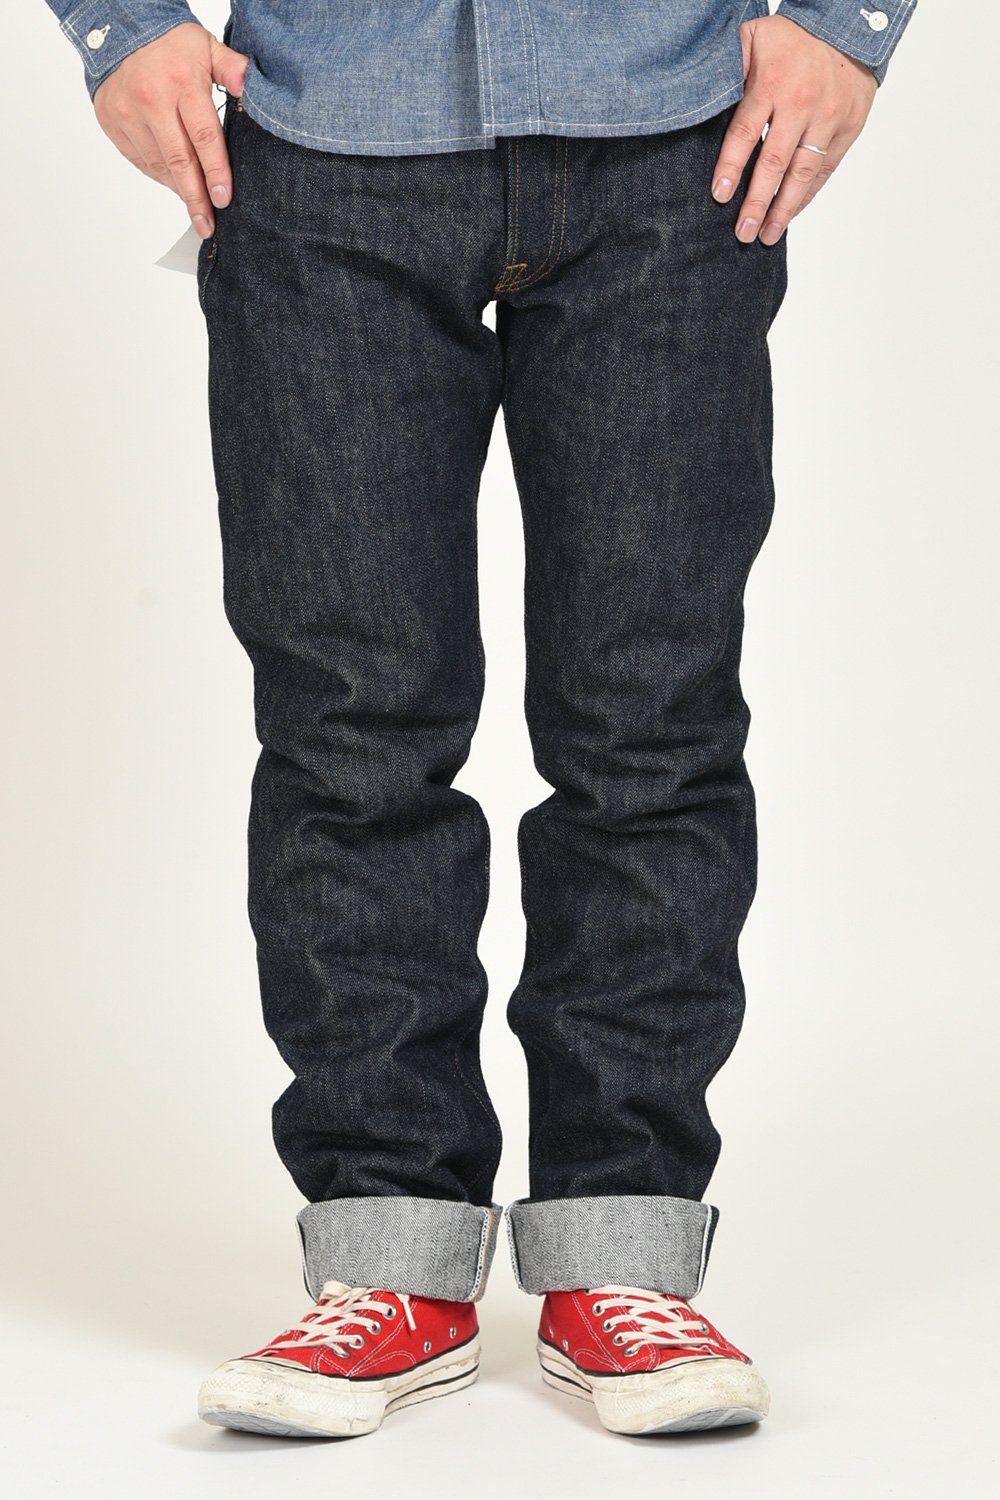 Samurai jeans デニムパンツ購入検討しています